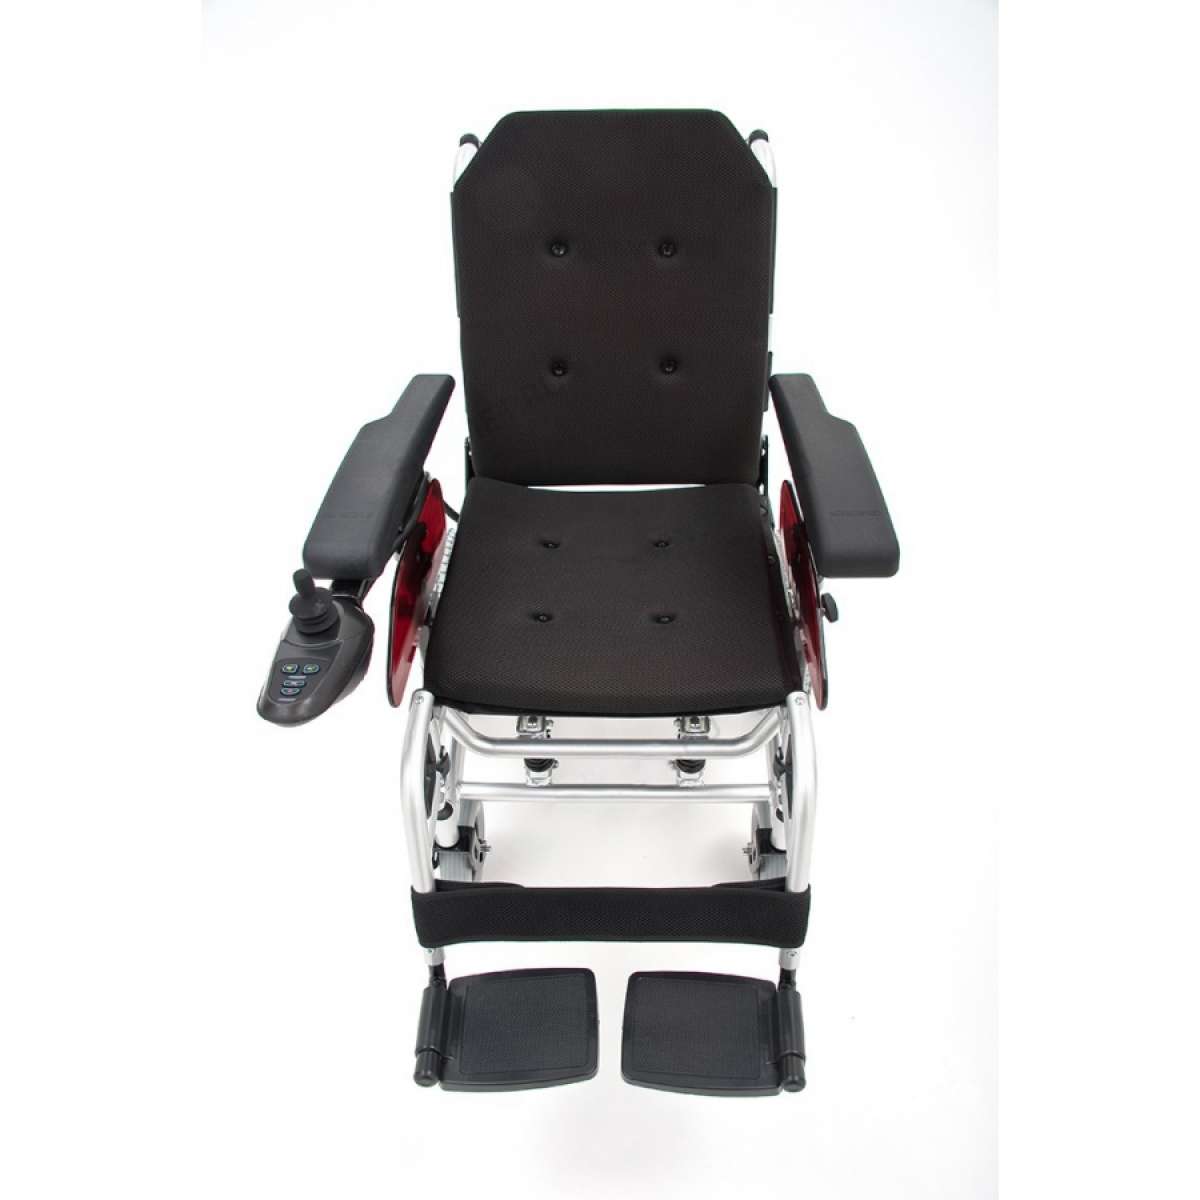 Алюминиевая кресло-коляска MET ROUTE 14